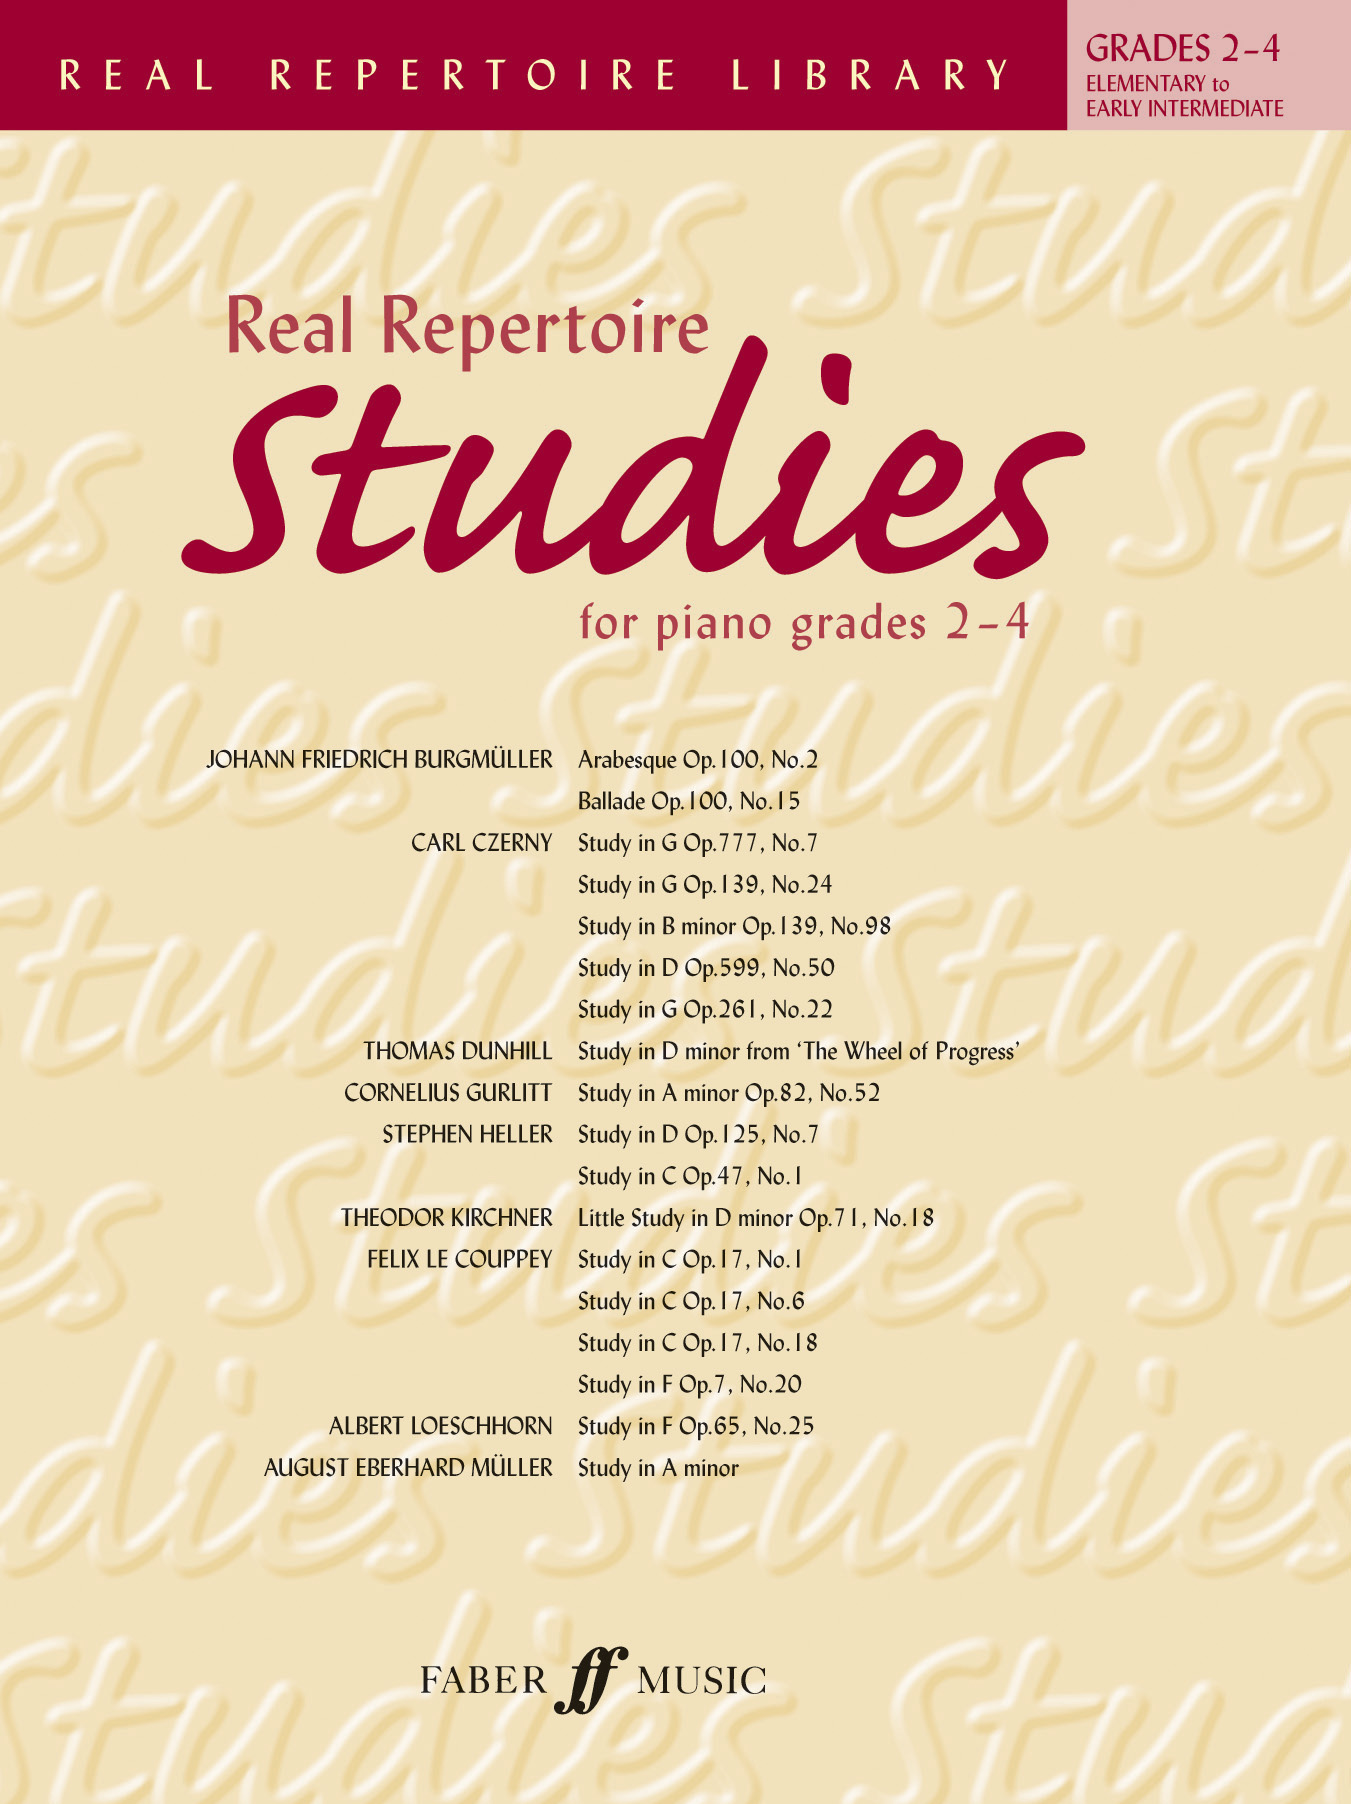 Real Repertoire Studies. Grades 2-4: Piano: Instrumental Album